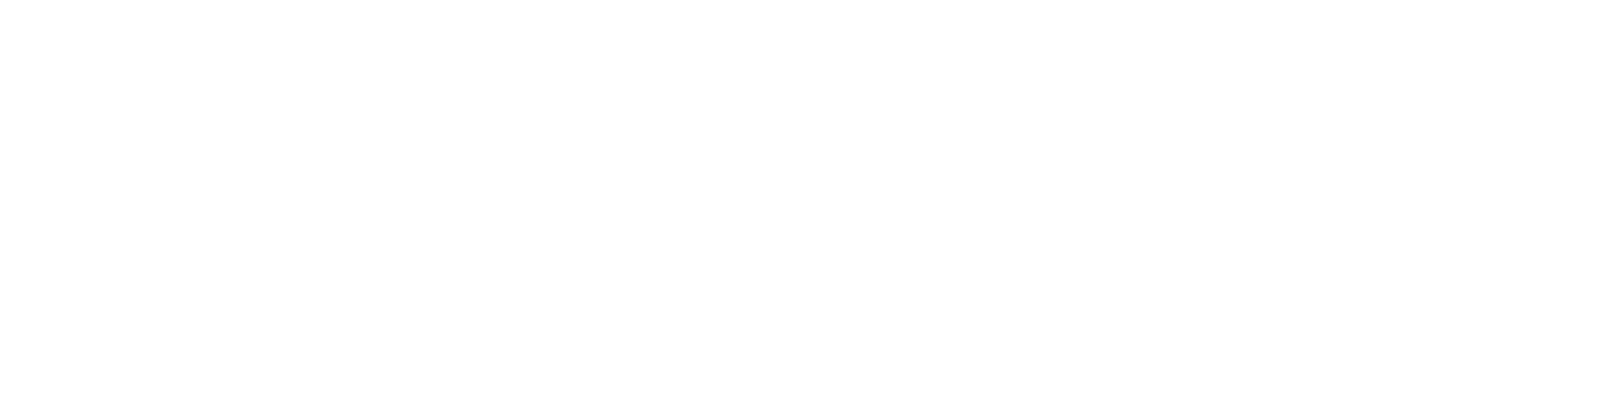 Sutro Biopharma logo large for dark backgrounds (transparent PNG)